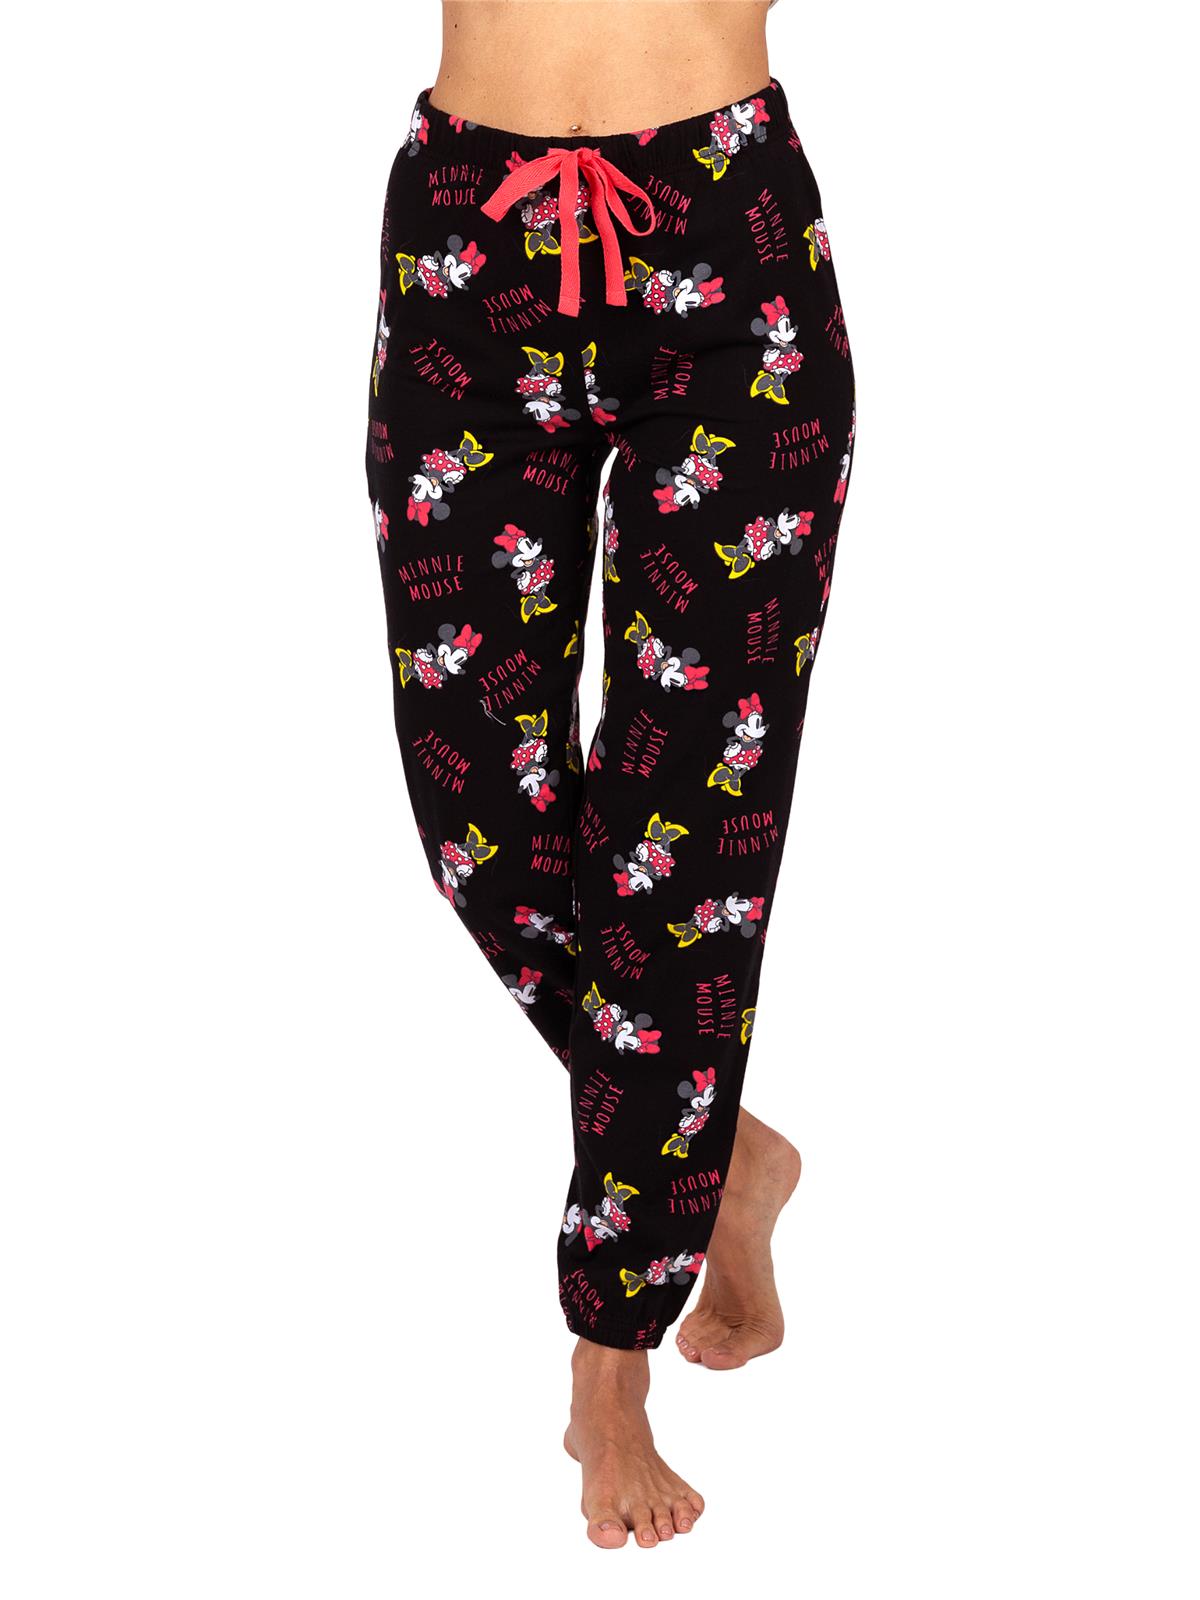 Disney Womens Lounge Pants Pajama Bottoms AOP (Pooh & Friends